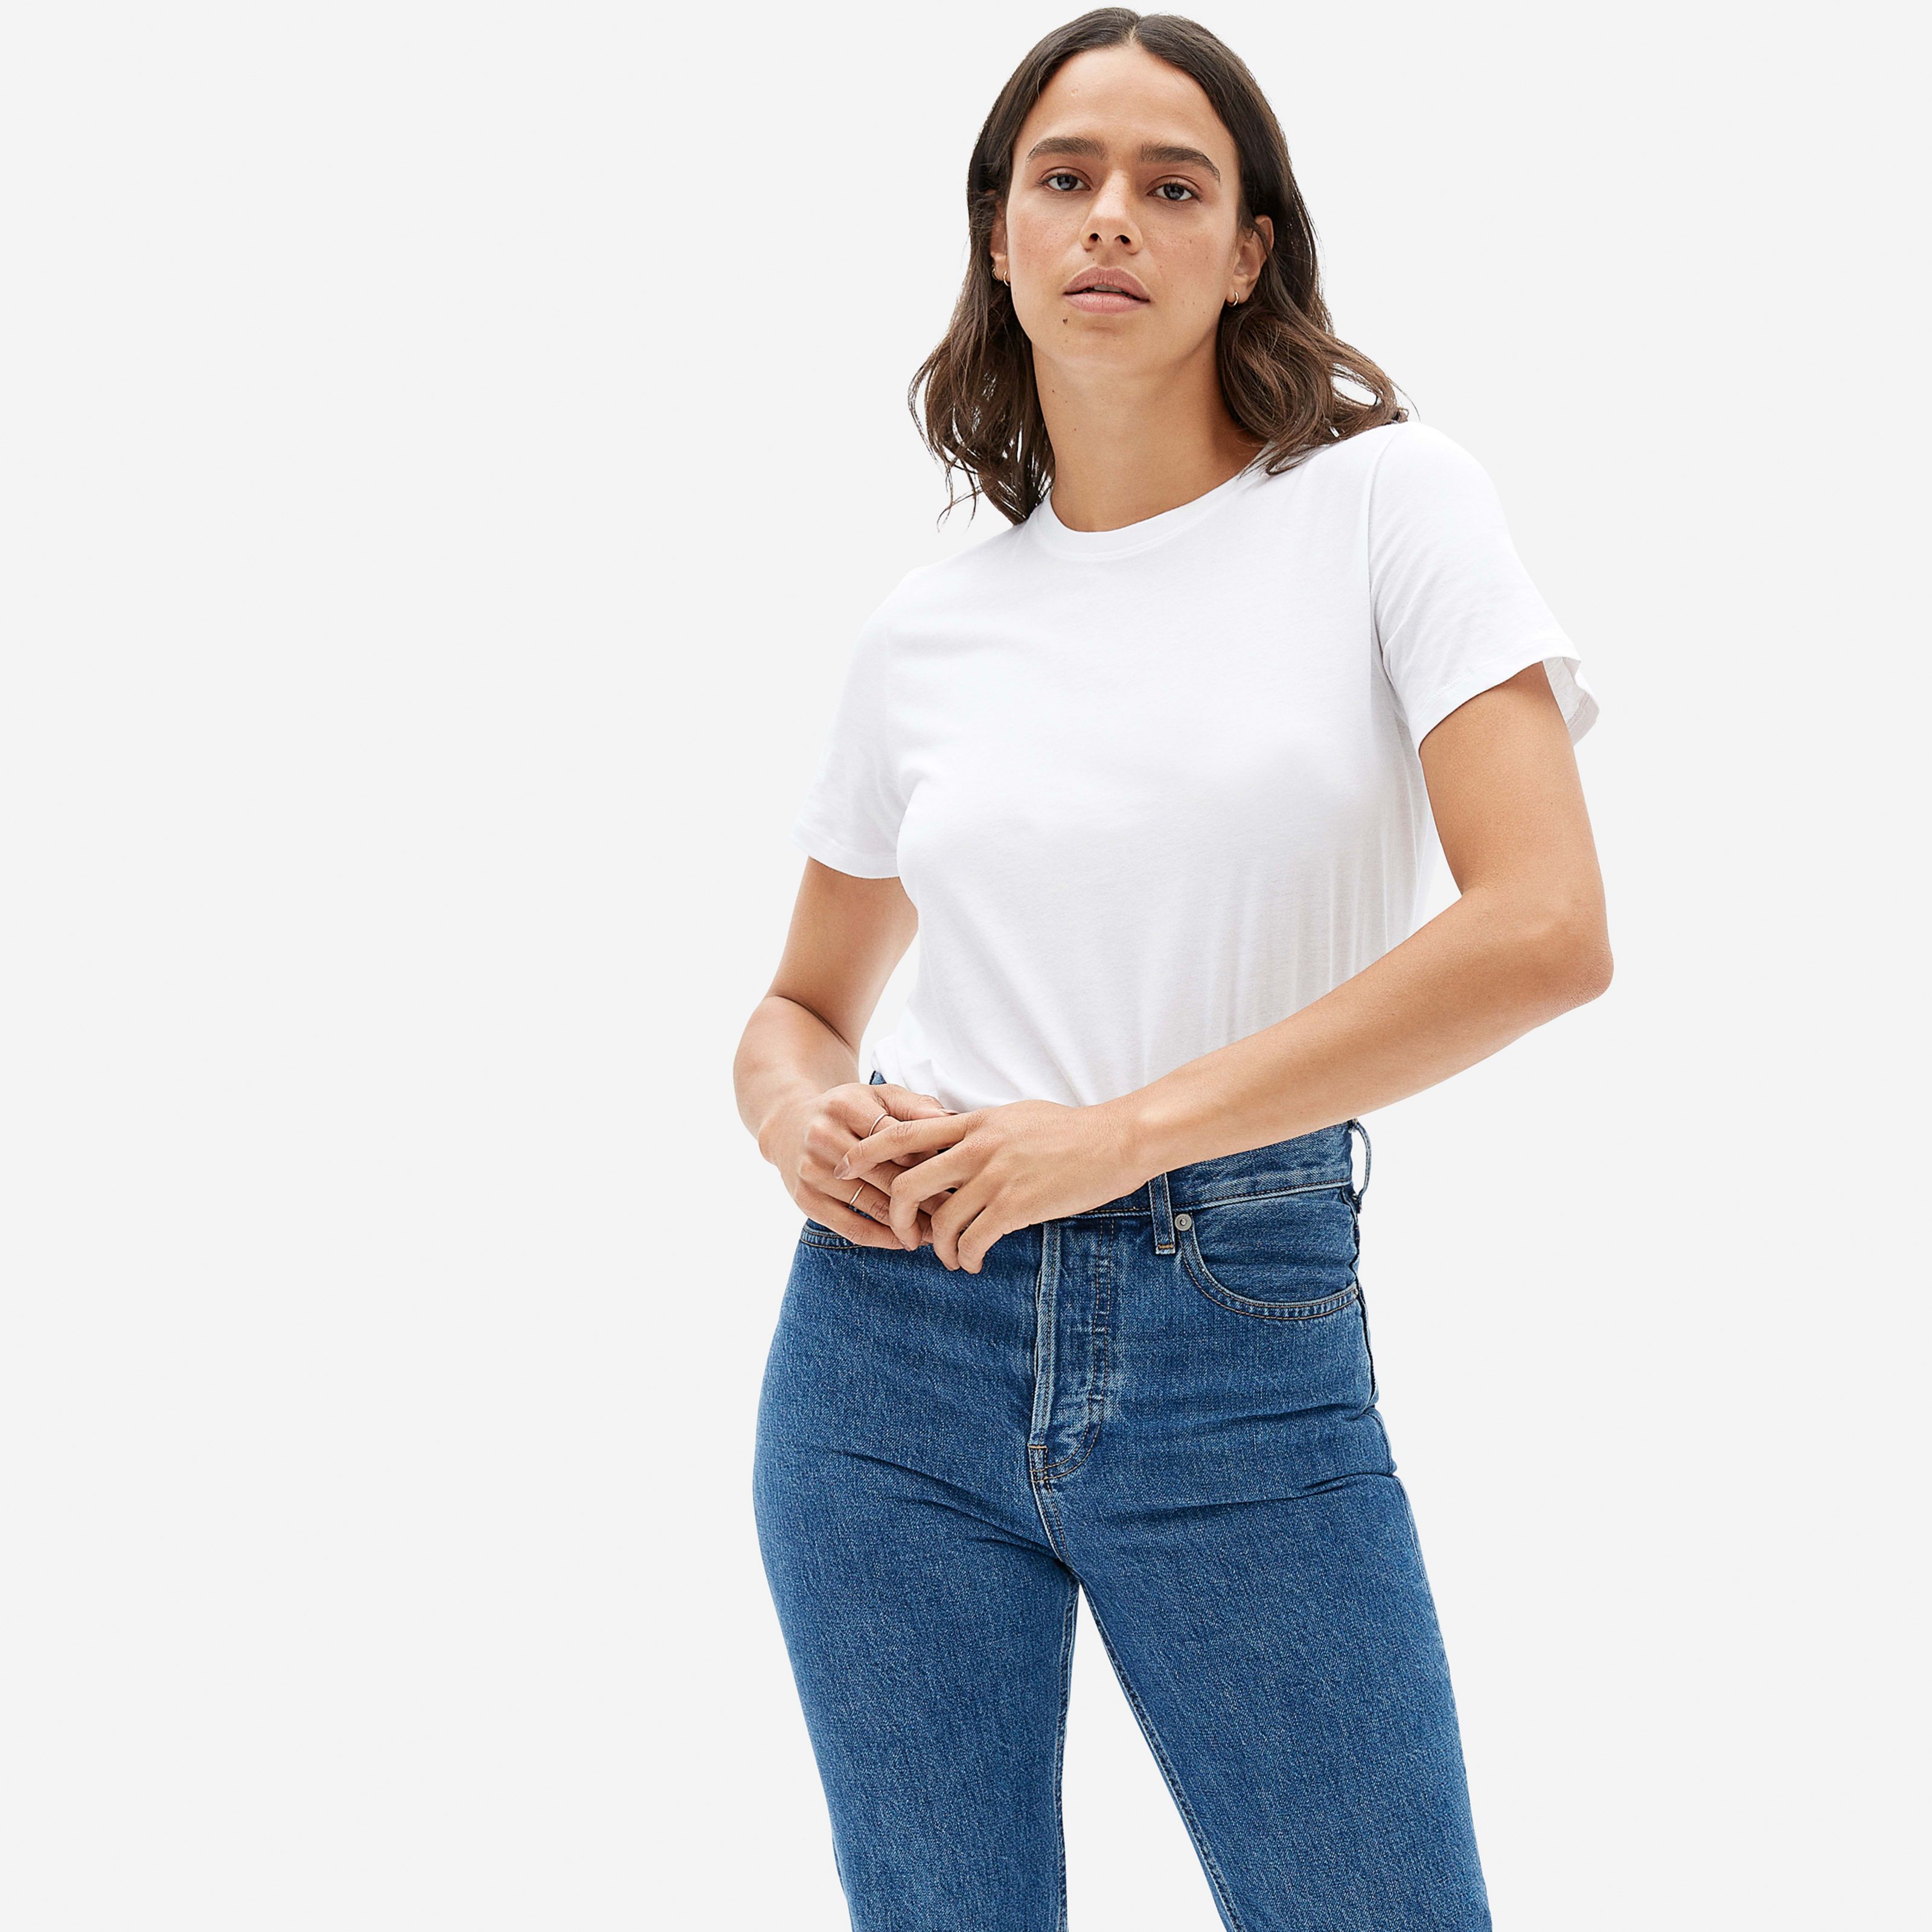 Women's Organic Cotton Crew T-Shirt by Everlane in White, Size XXS | Everlane